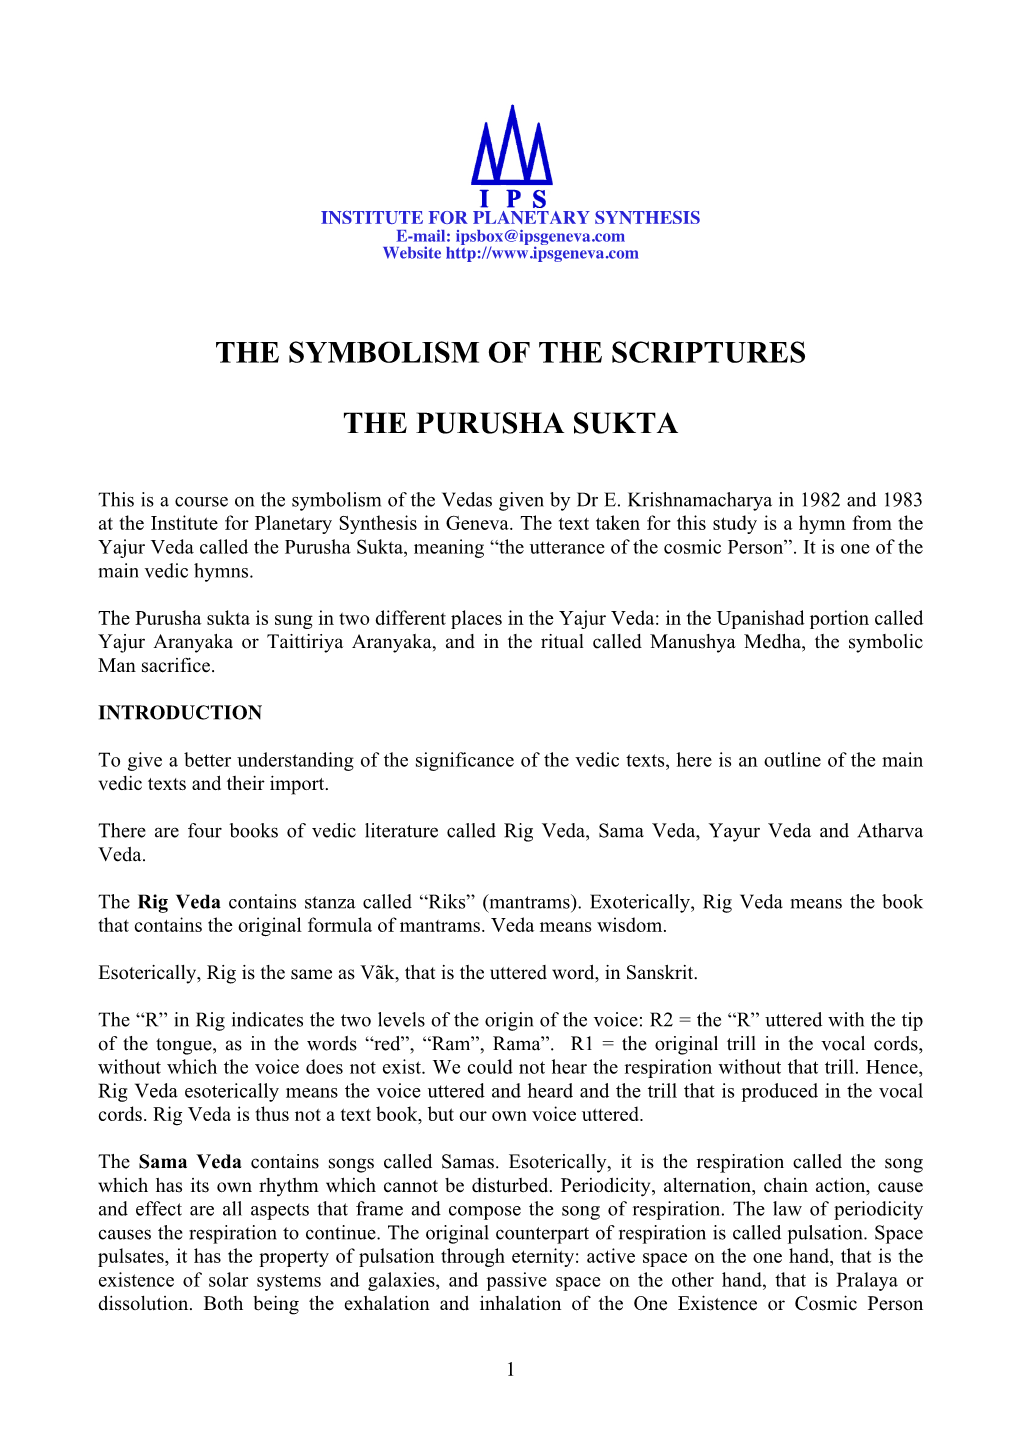 The Symbolism of the Scriptures the Purusha